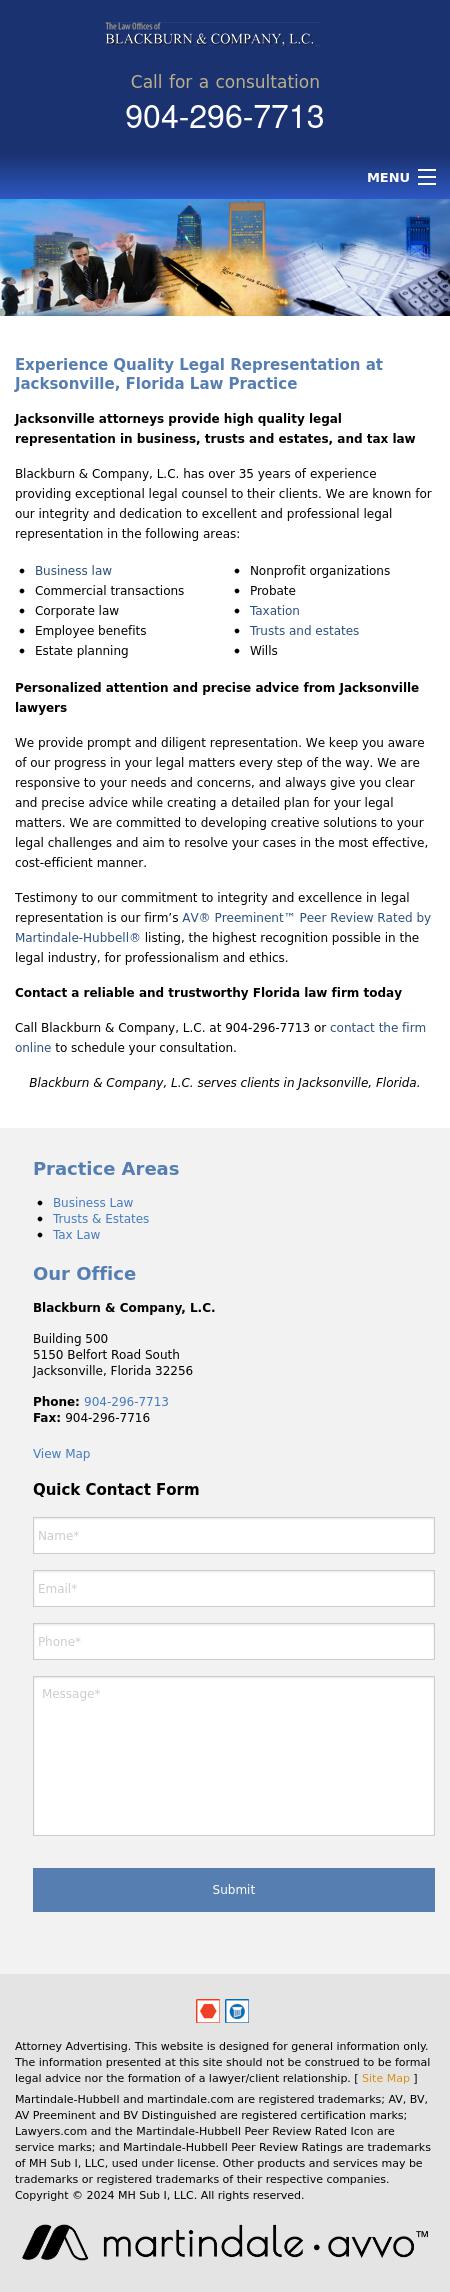 Blackburn, Dennis L - Jacksonville FL Lawyers